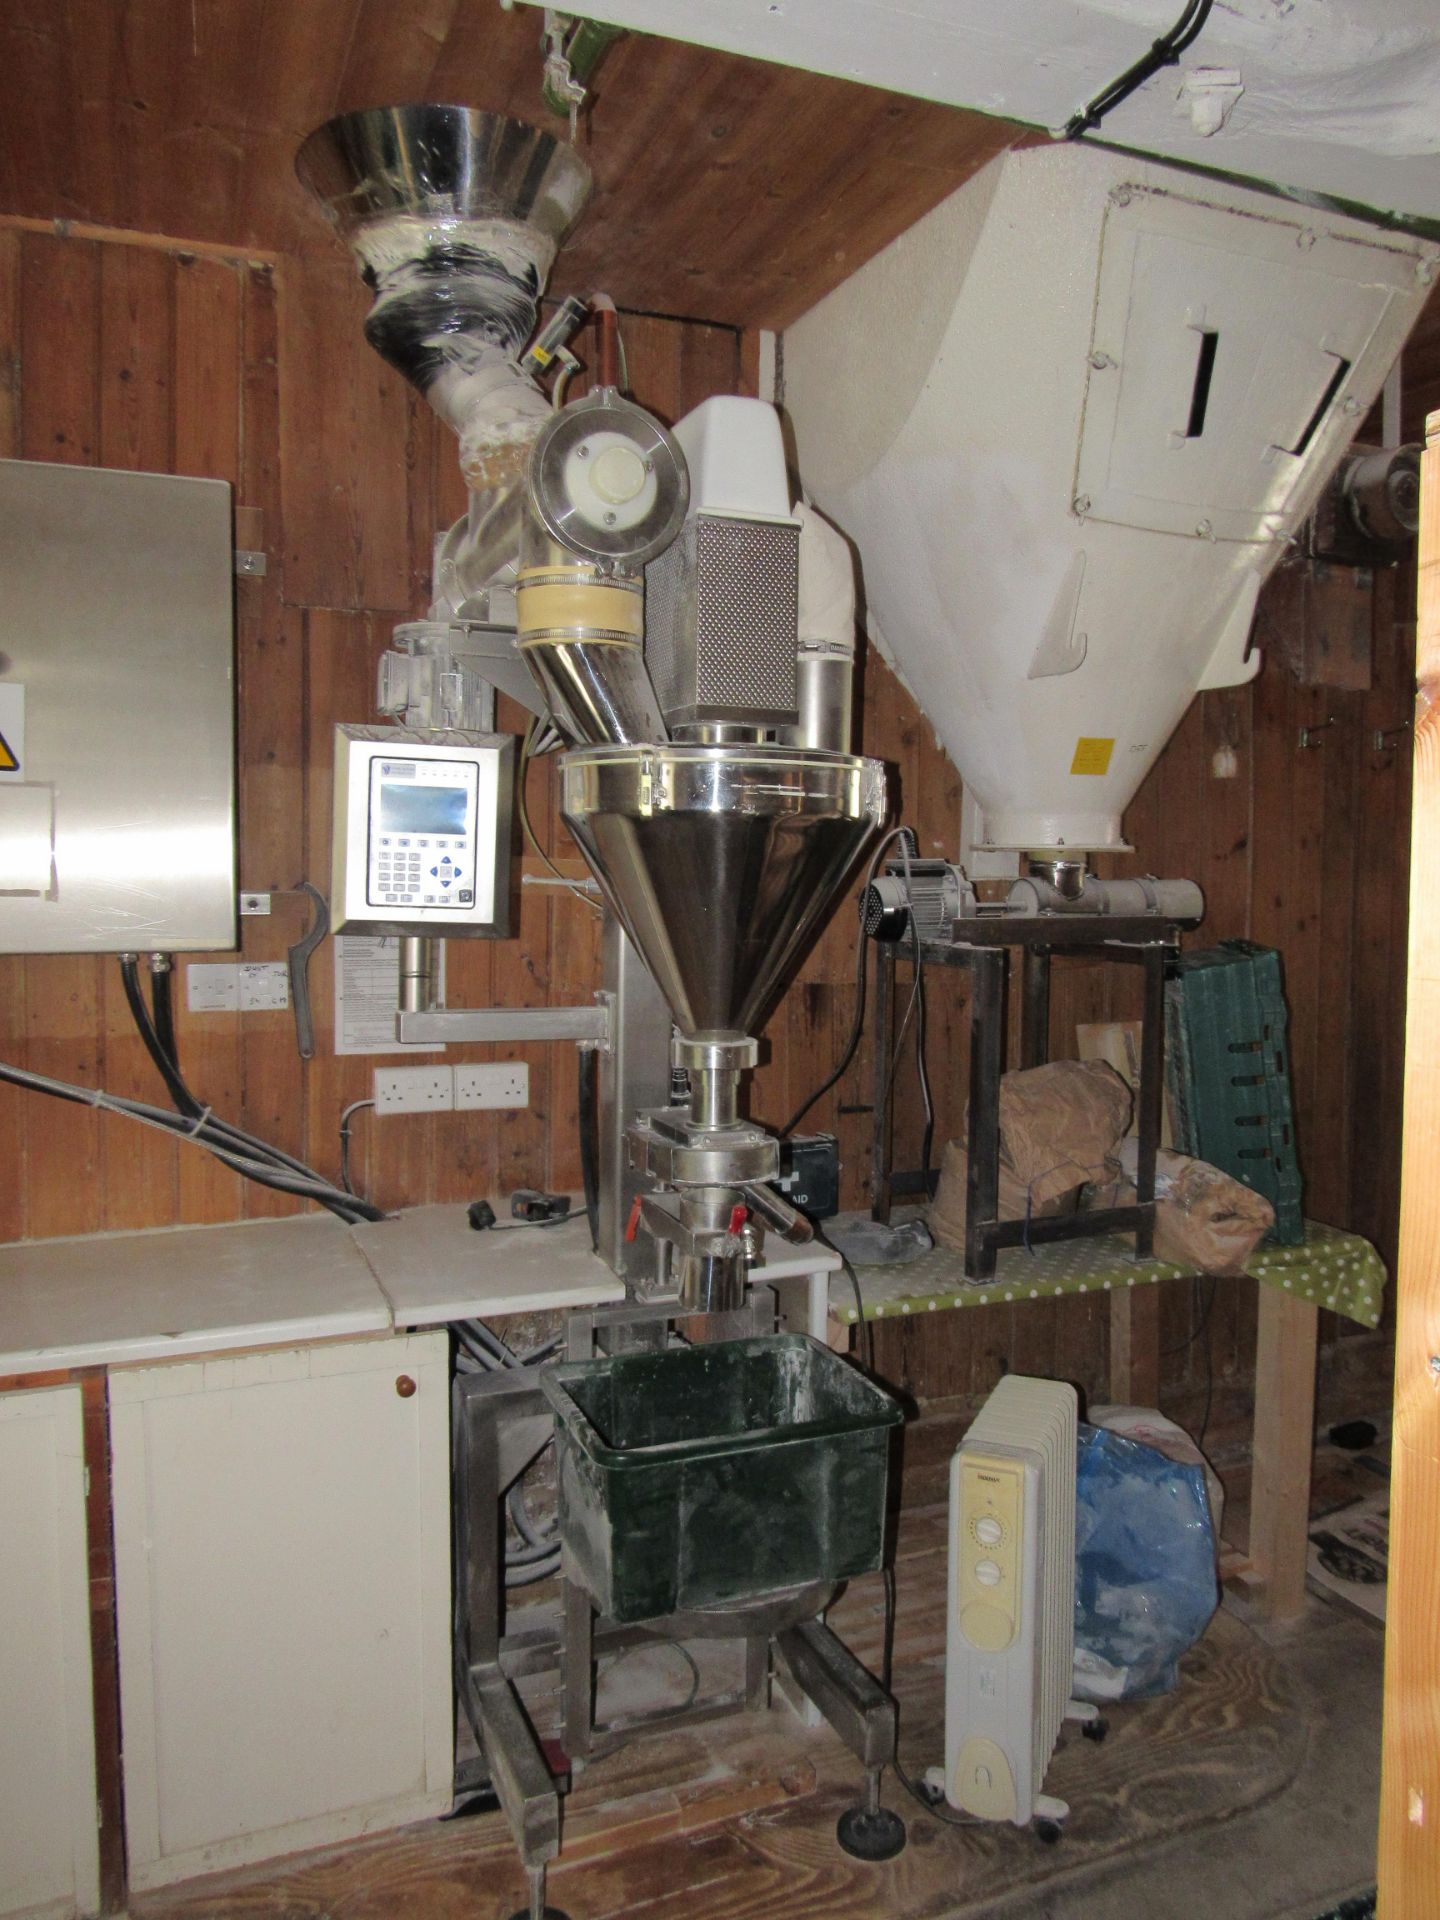 Ward Becker / Guttridge mechanical batch weigher / flour bagging machine with control system - Image 14 of 17